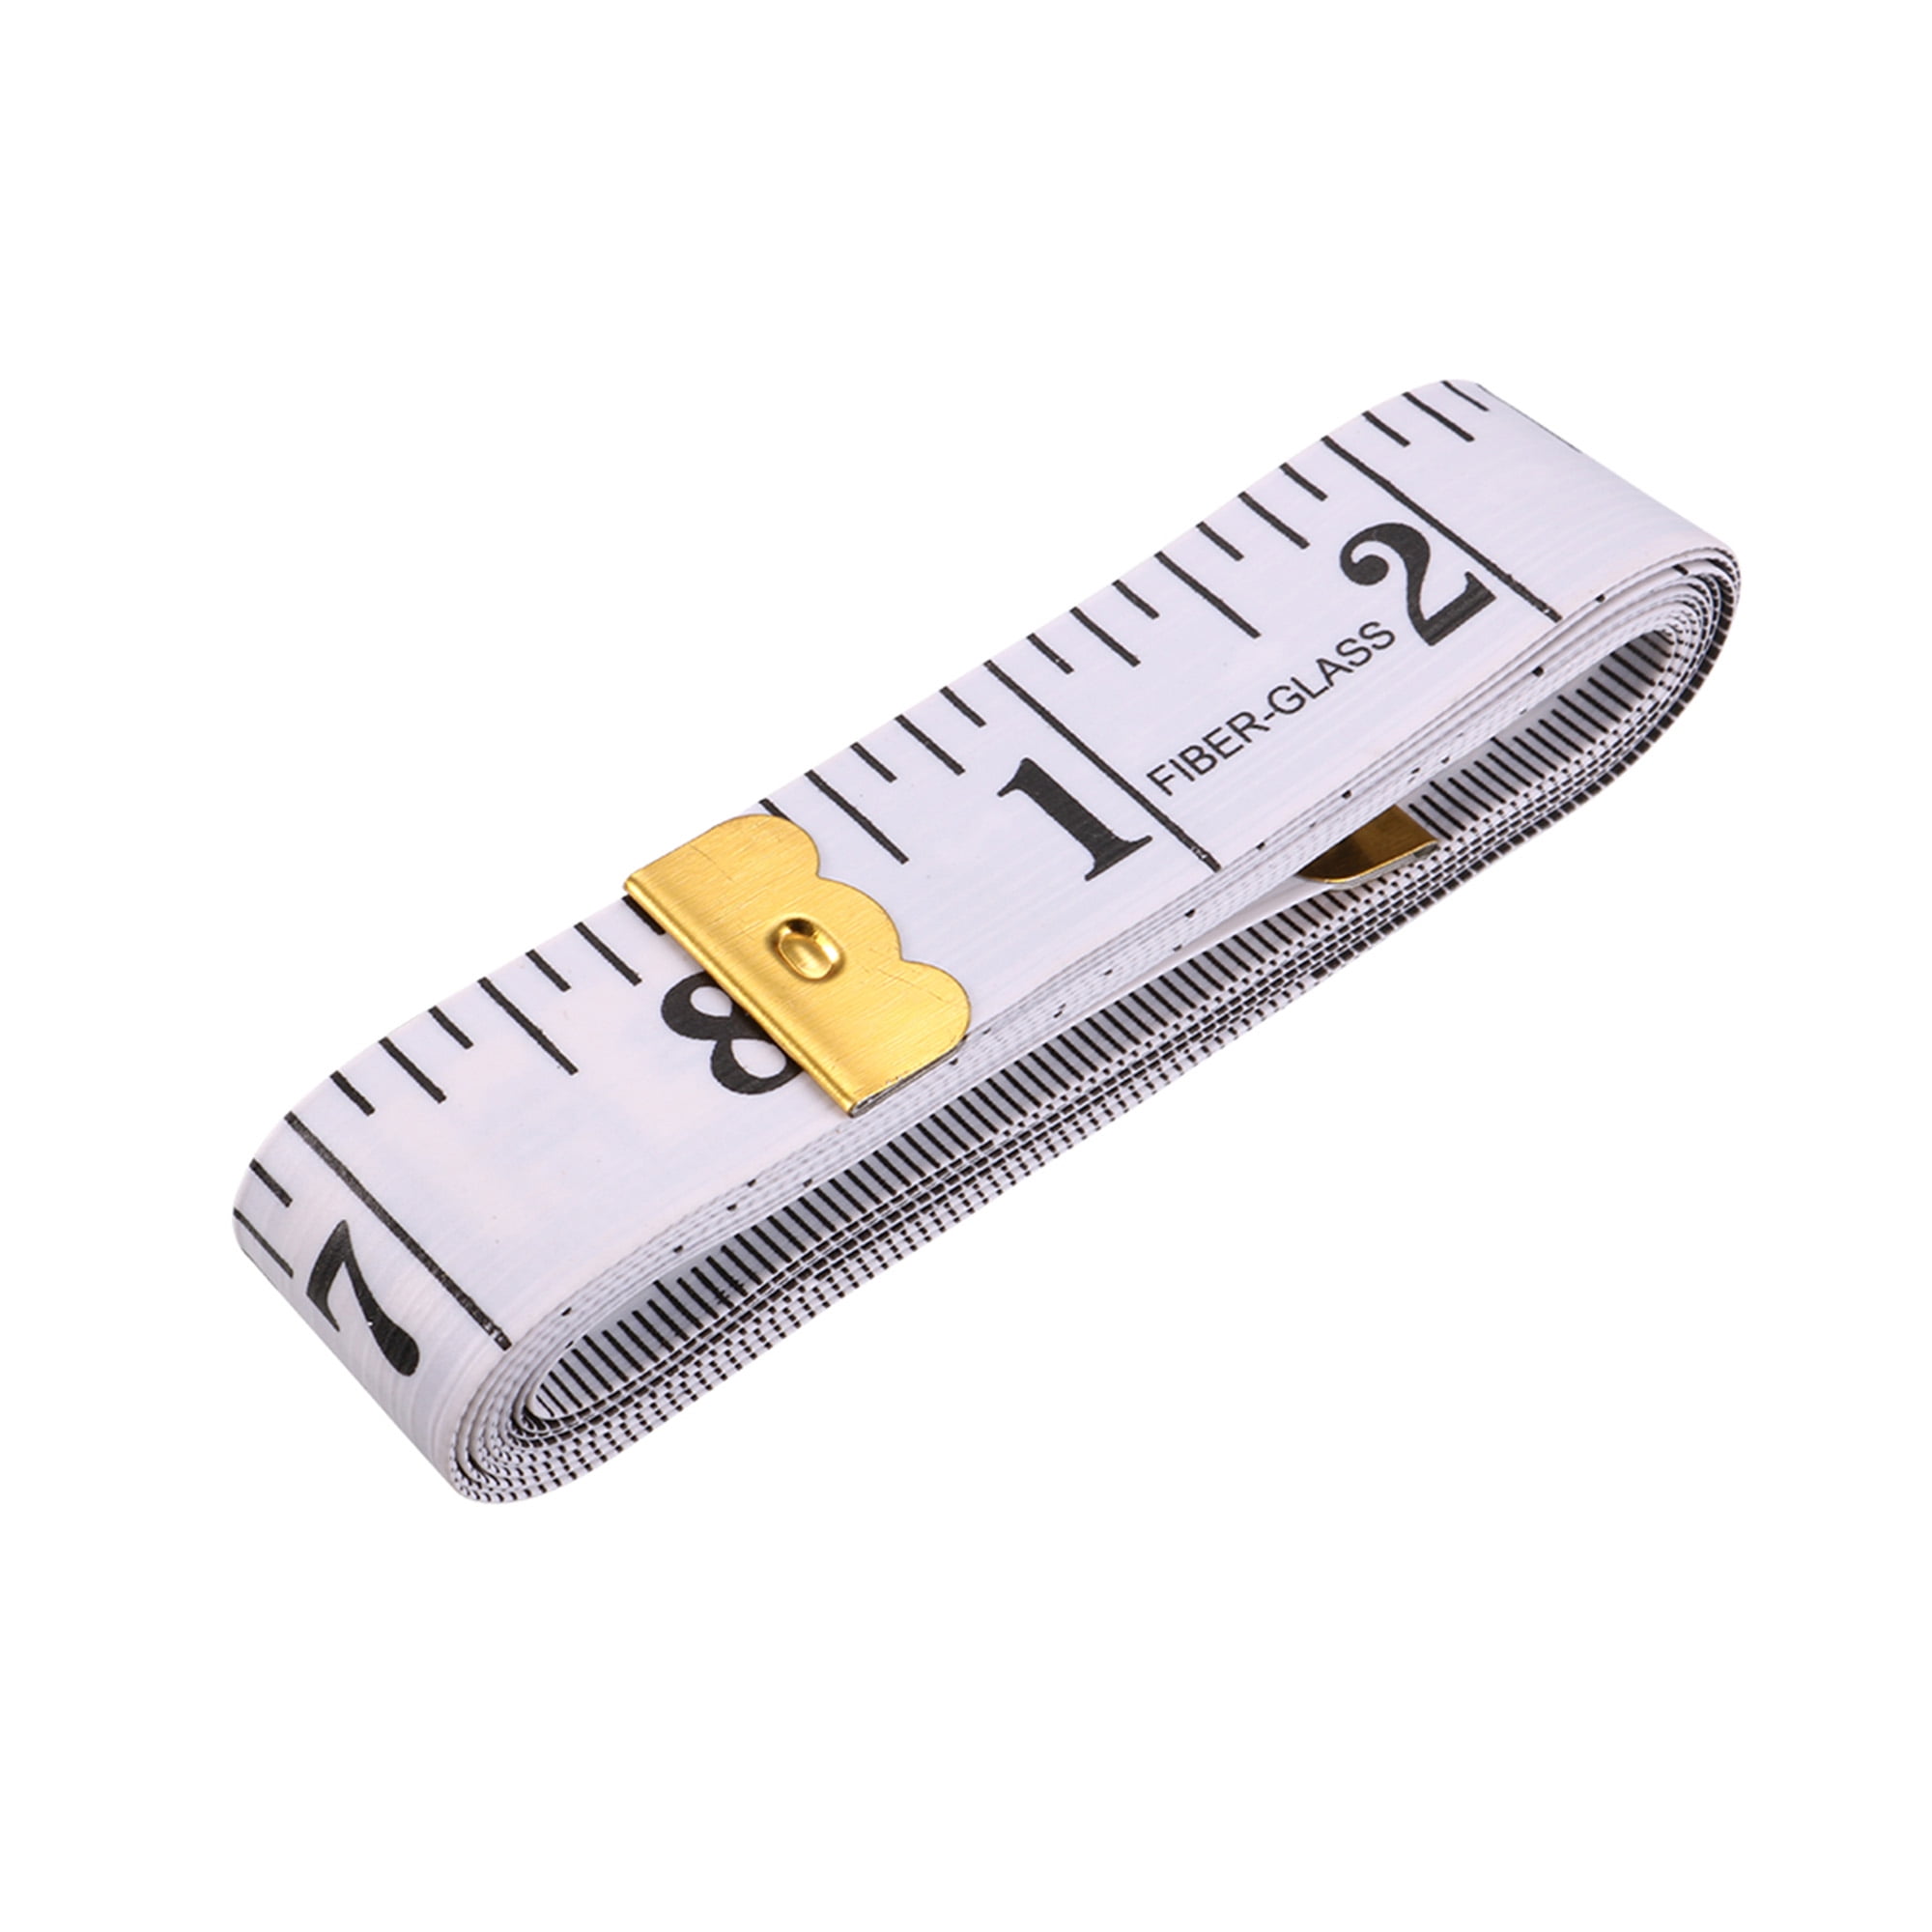 Dukal Tech-Med® 72 Cloth Tape Measure (4417)